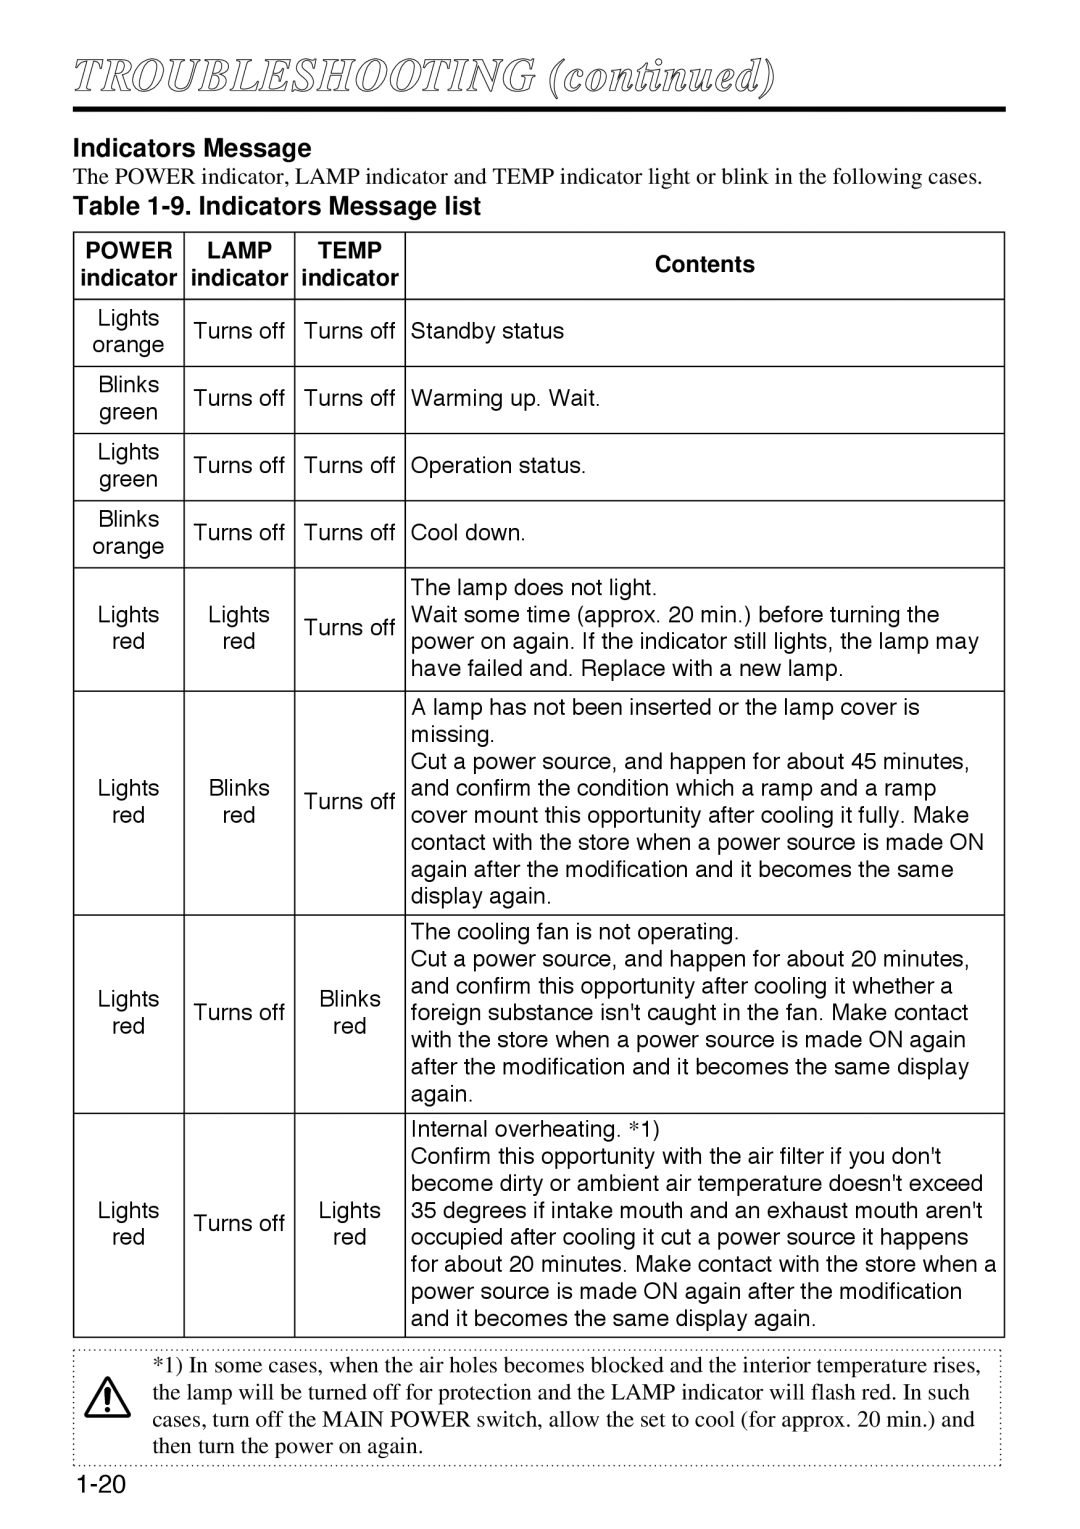 Polaroid SVGA 270 manual TROUBLESHOOTING continued, 9. Indicators Message list 